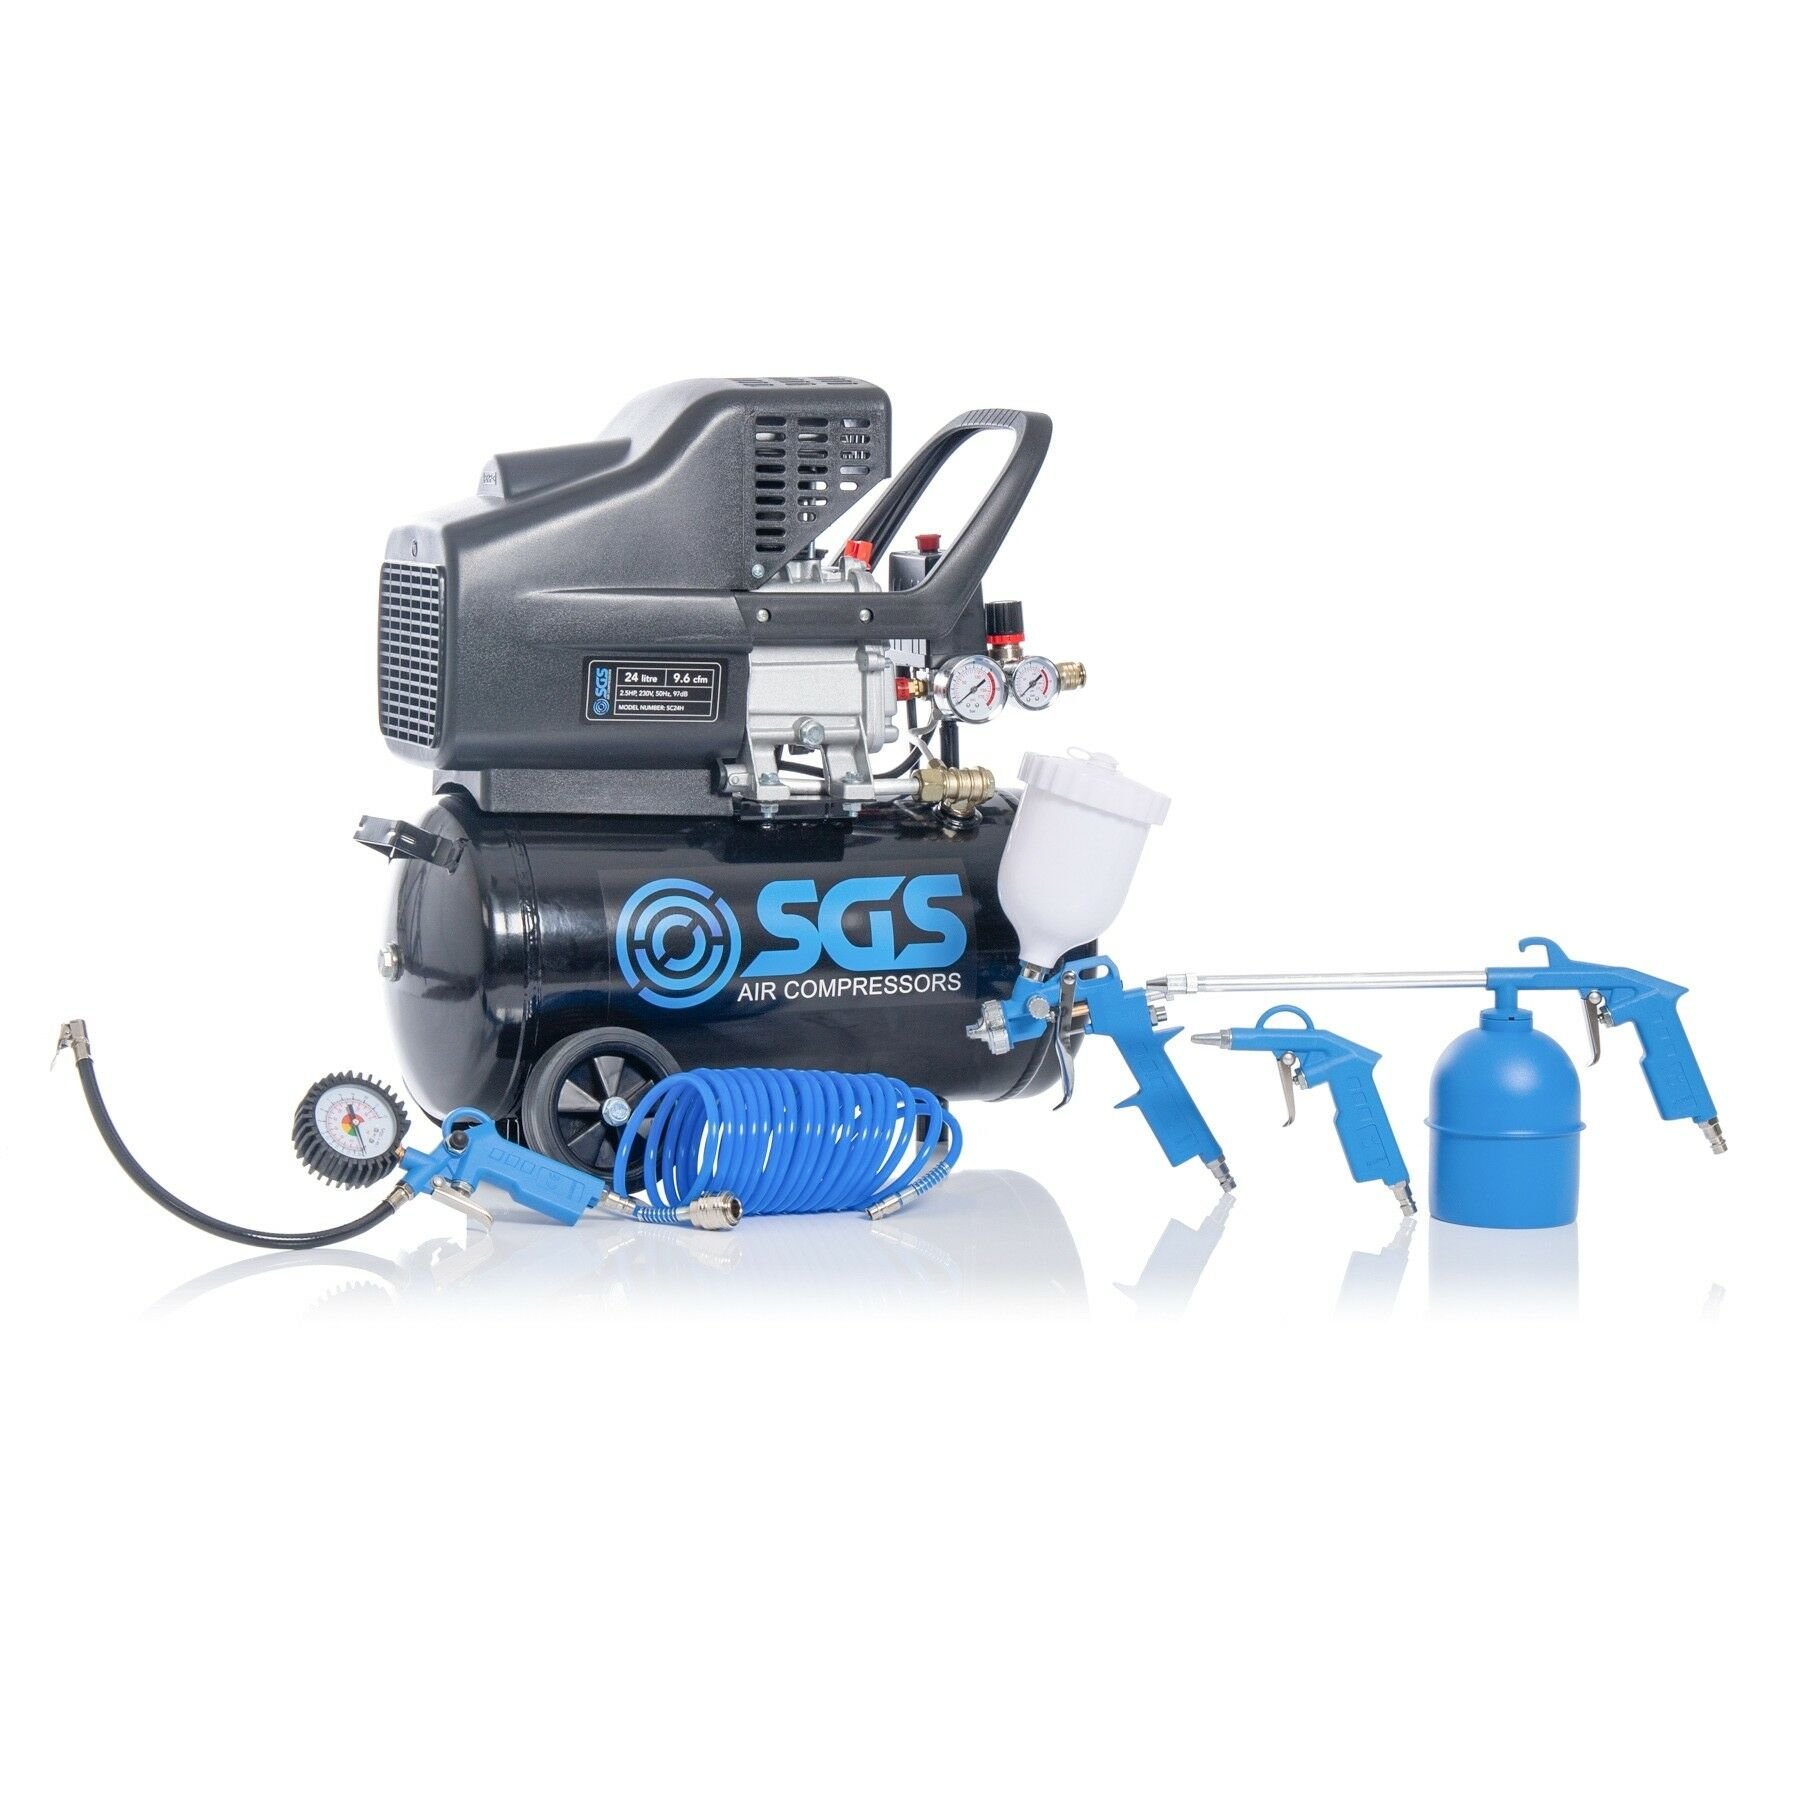 SGS 24 Litre Direct Drive Air Compressor & 5 Piece Tool Kit - 9.6CFM  2.5HP  24L